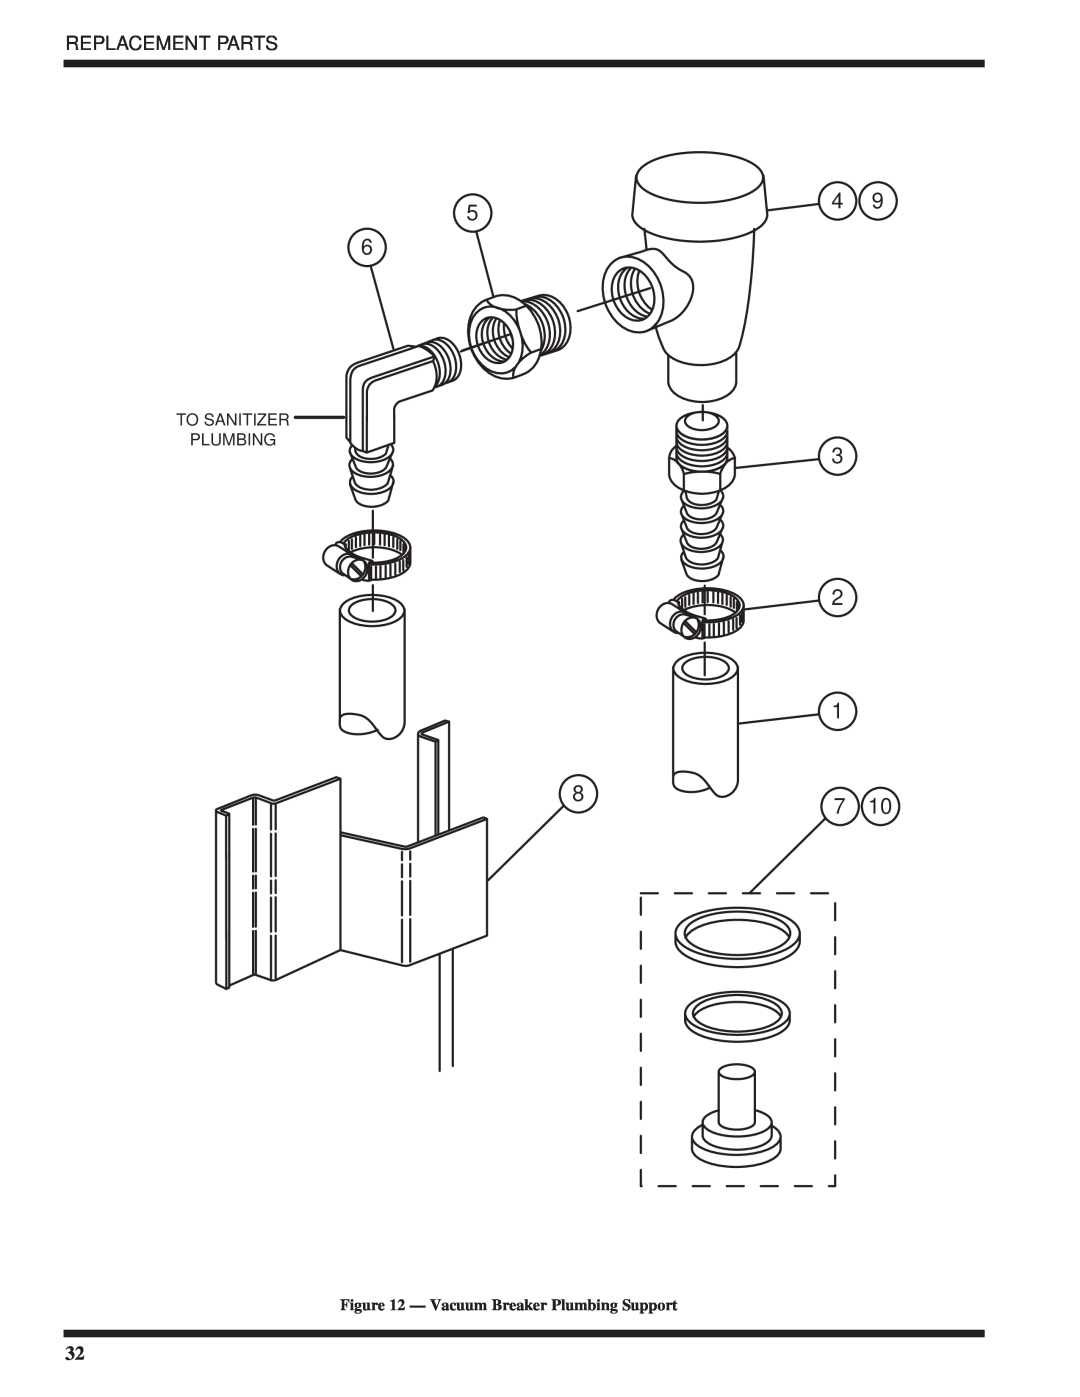 Moyer Diebel DF1-M6, DF-M6, DF2-M6 technical manual Replacement Parts, To Sanitizer Plumbing, Vacuum Breaker Plumbing Support 